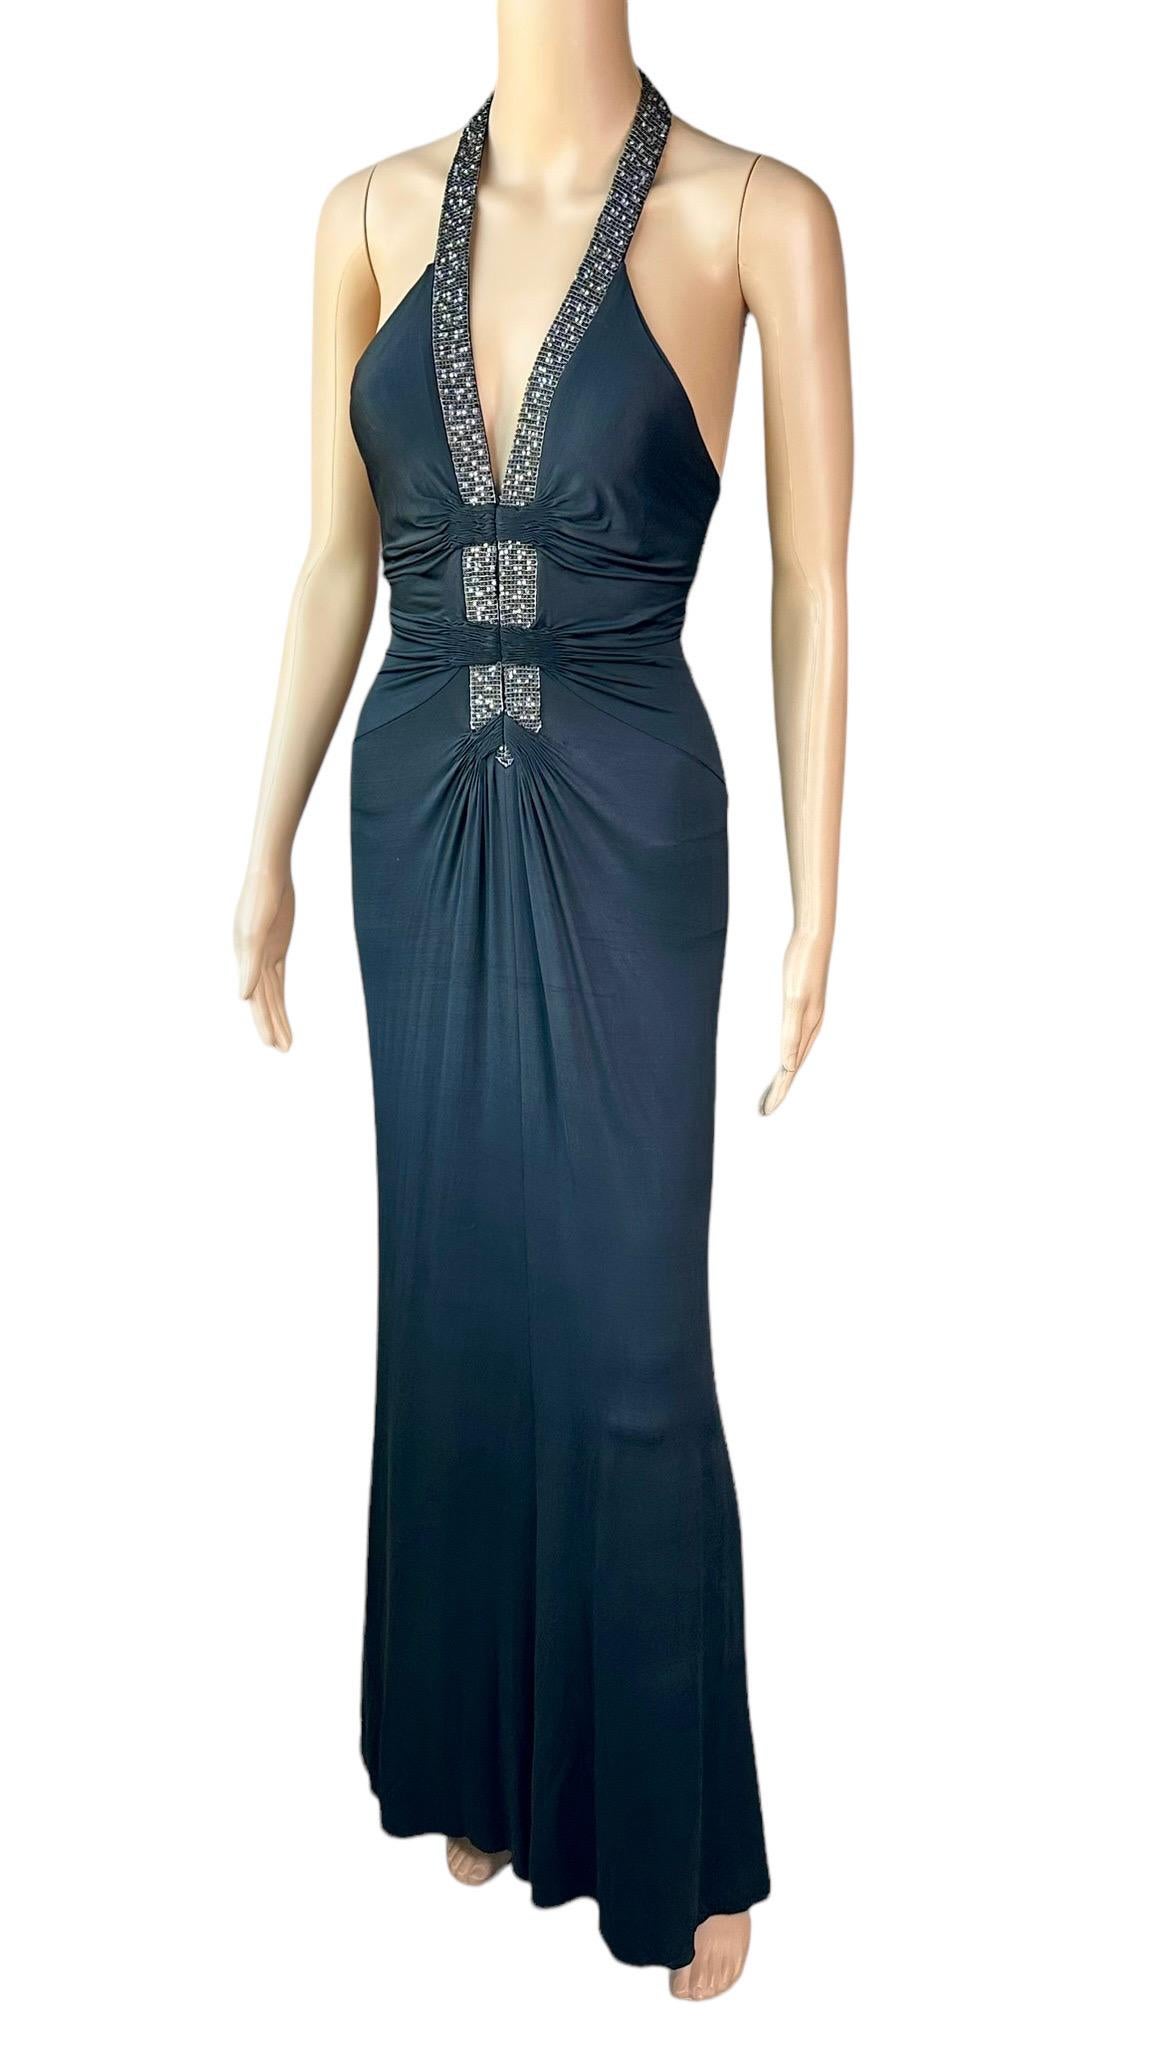 Roberto Cavalli S/S 2005 Embellished Plunging Neckline Black Maxi Evening Dress For Sale 2